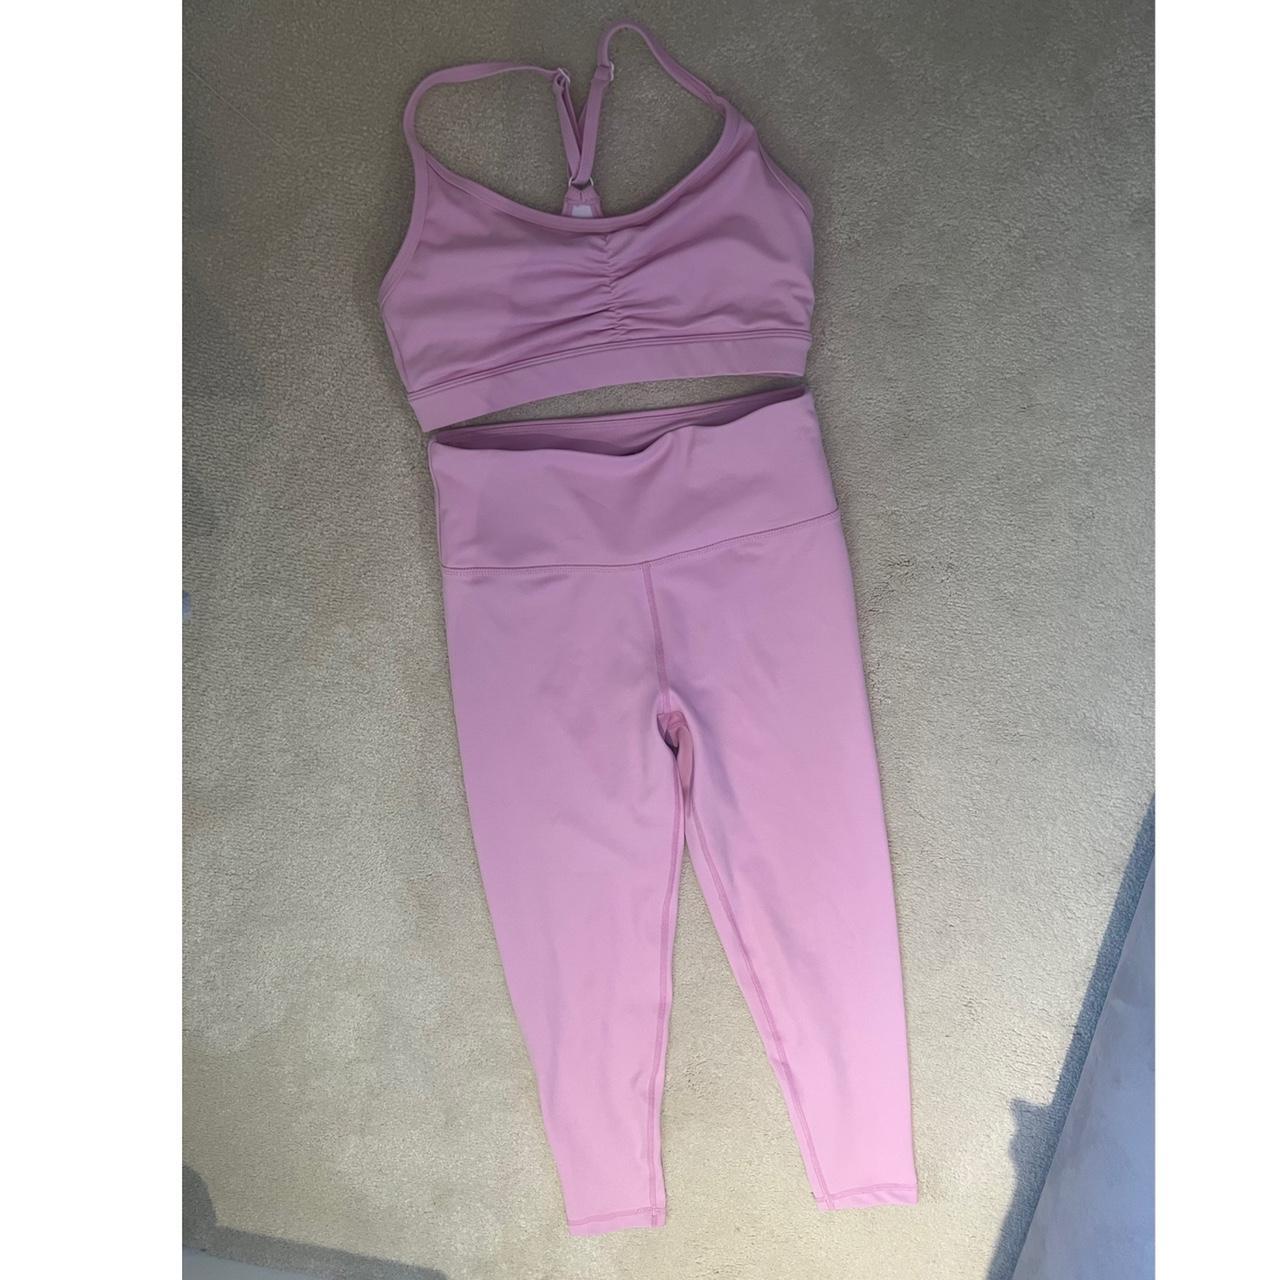 Muscle republic Pink Gym set - leggings &... - Depop